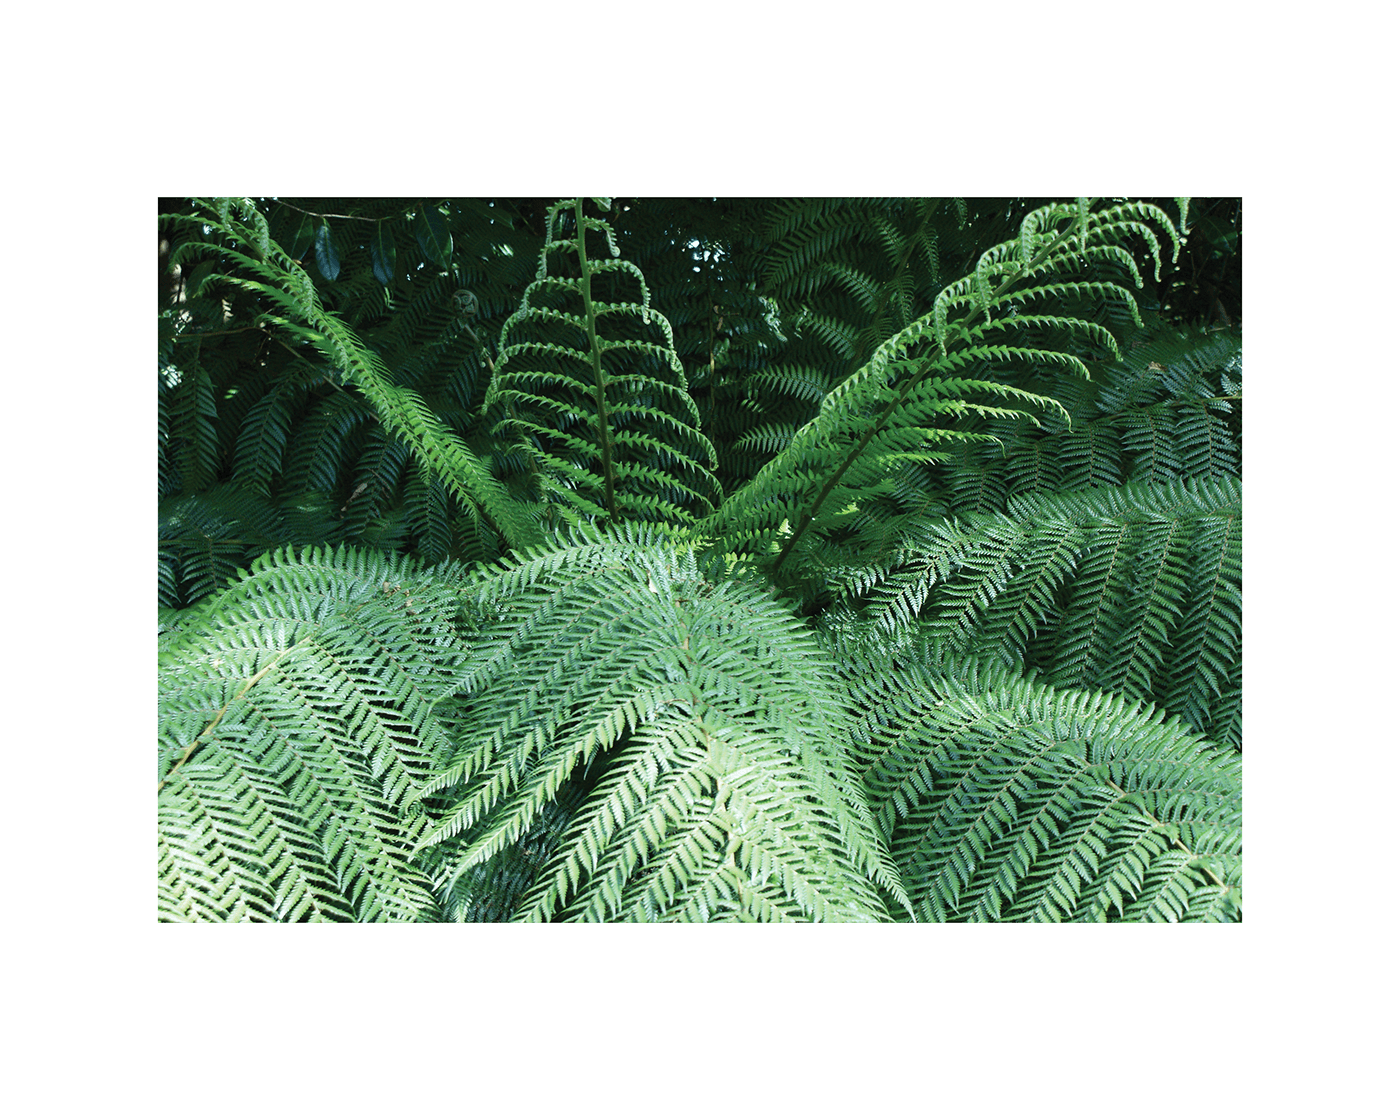 Landscape image of giant tree fern